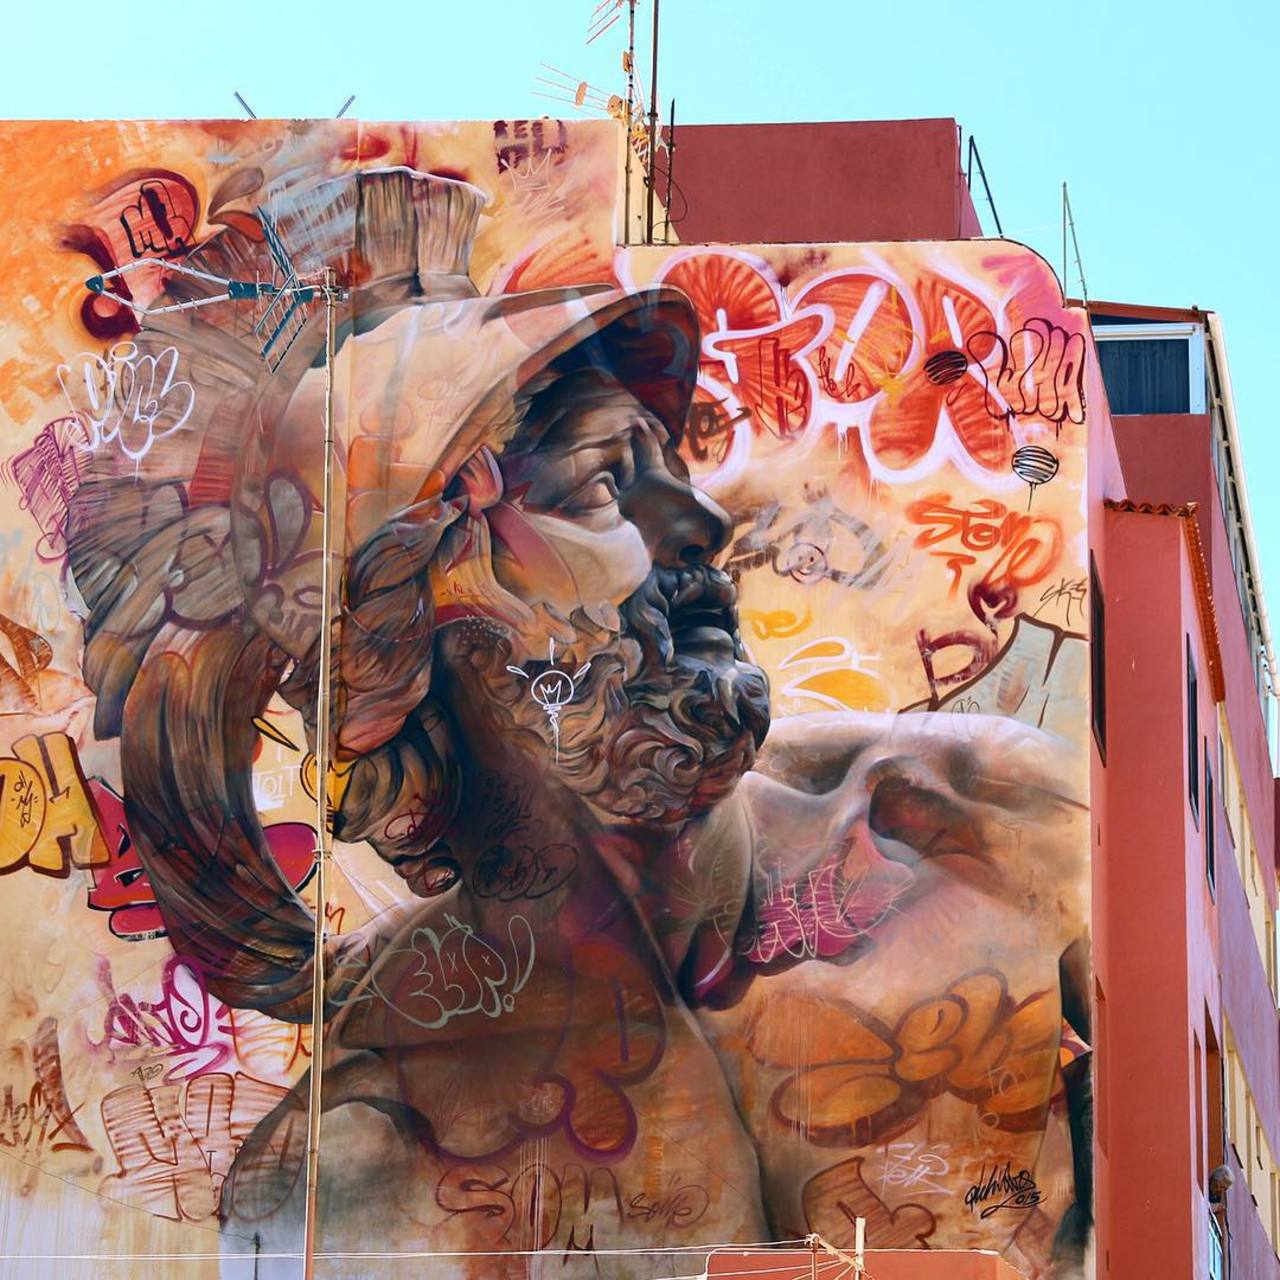 PichiAvo unveiled a beautiful new mural called 'Urban Warrior' in Tenerife, Spain. #StreetArt #Graffiti #Mural https://t.co/OGO8HBcS59